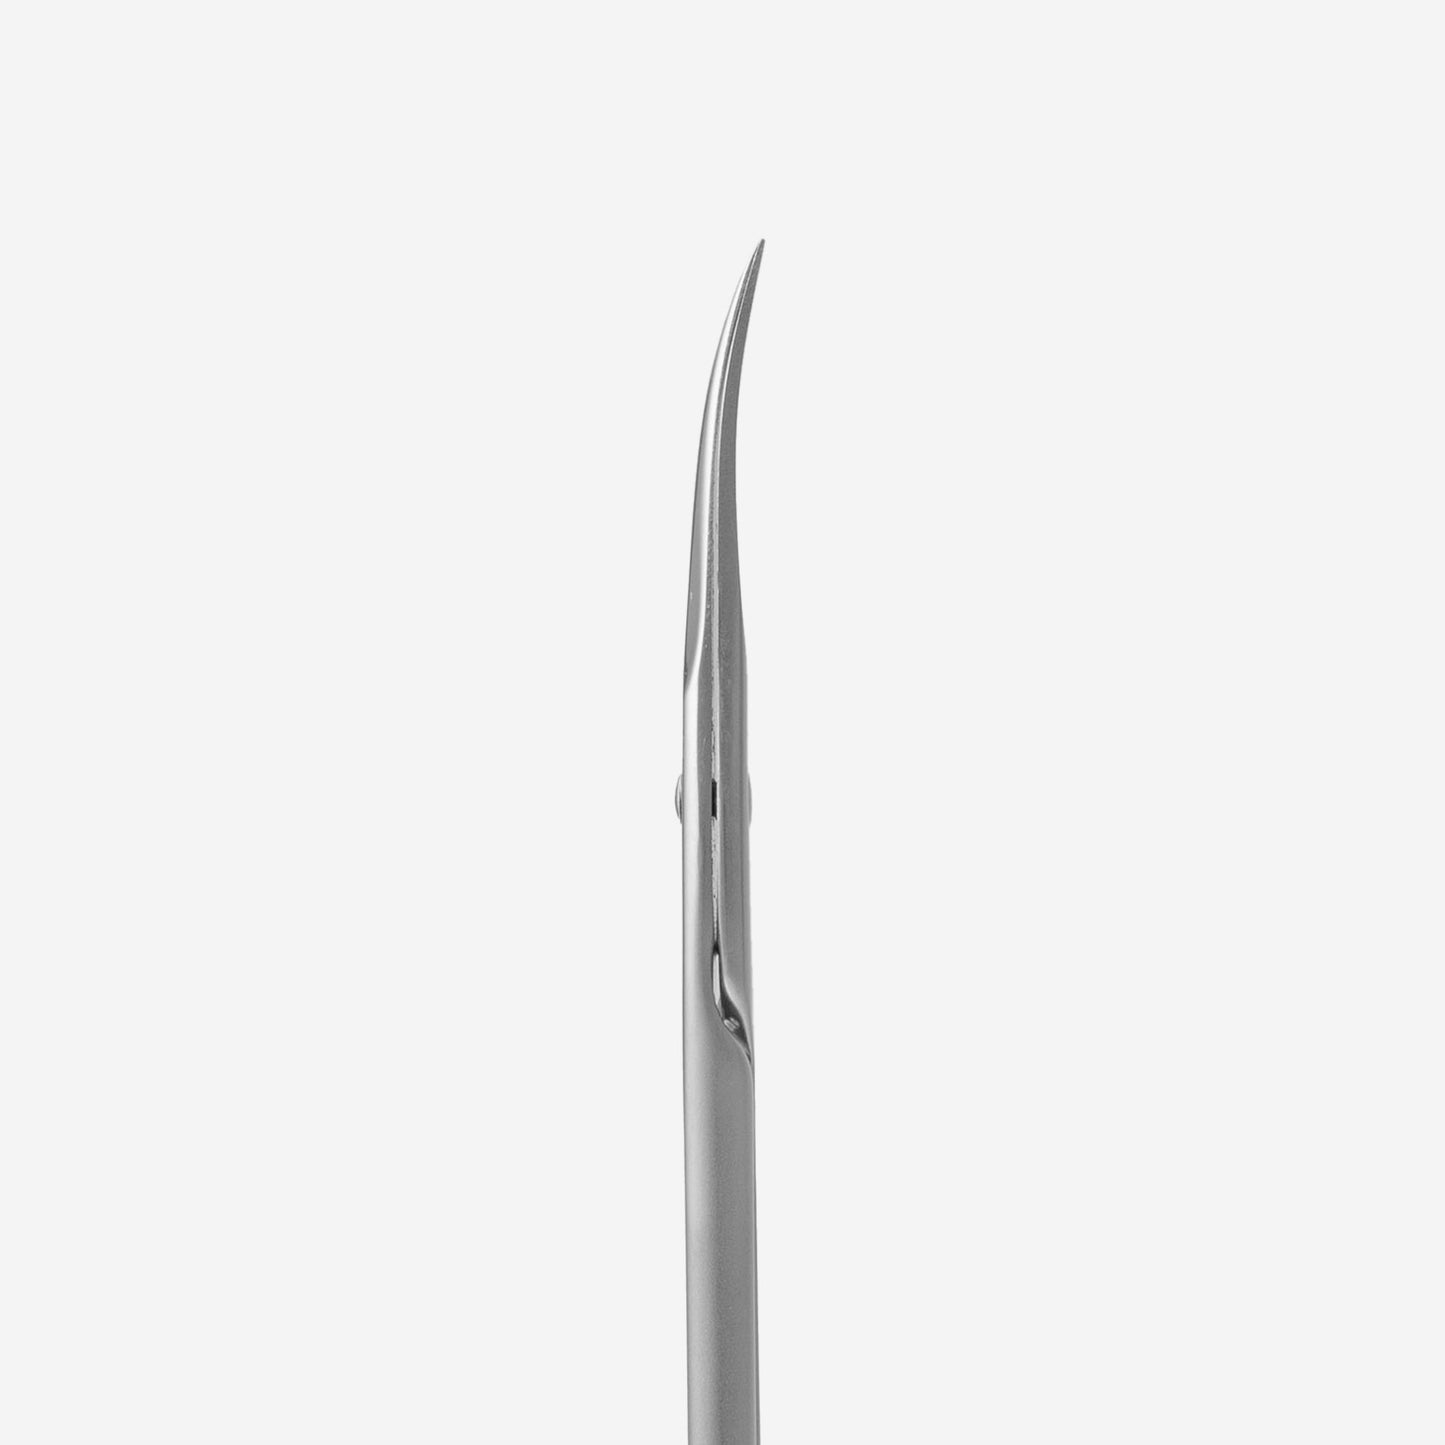 Professional cuticle scissors “Ballerina” UNIQ 10 TYPE 3